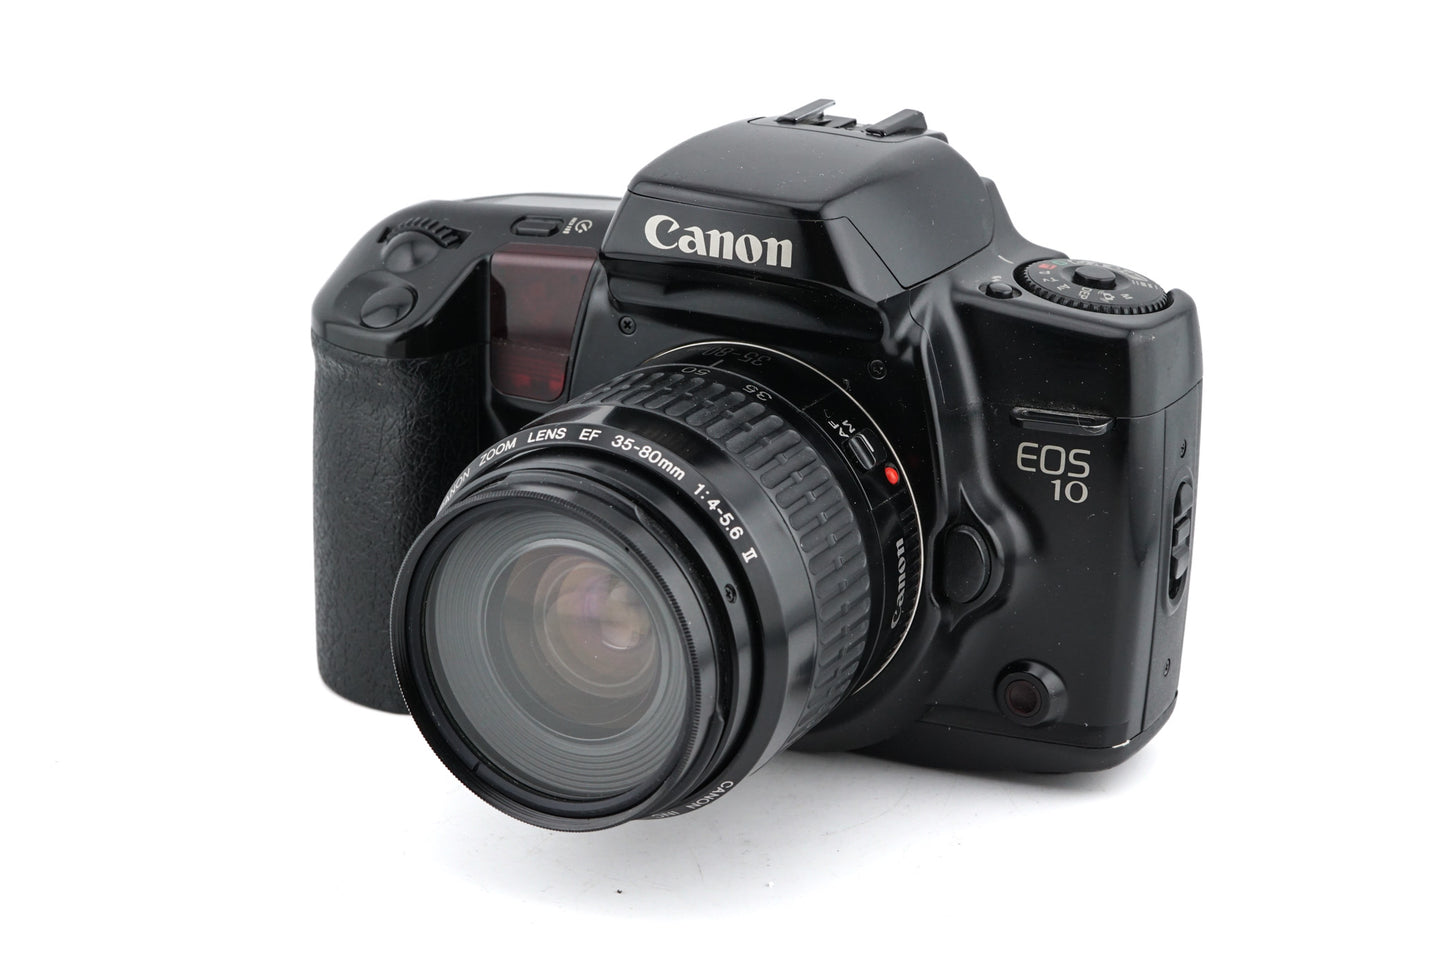 Canon EOS 10 - Camera